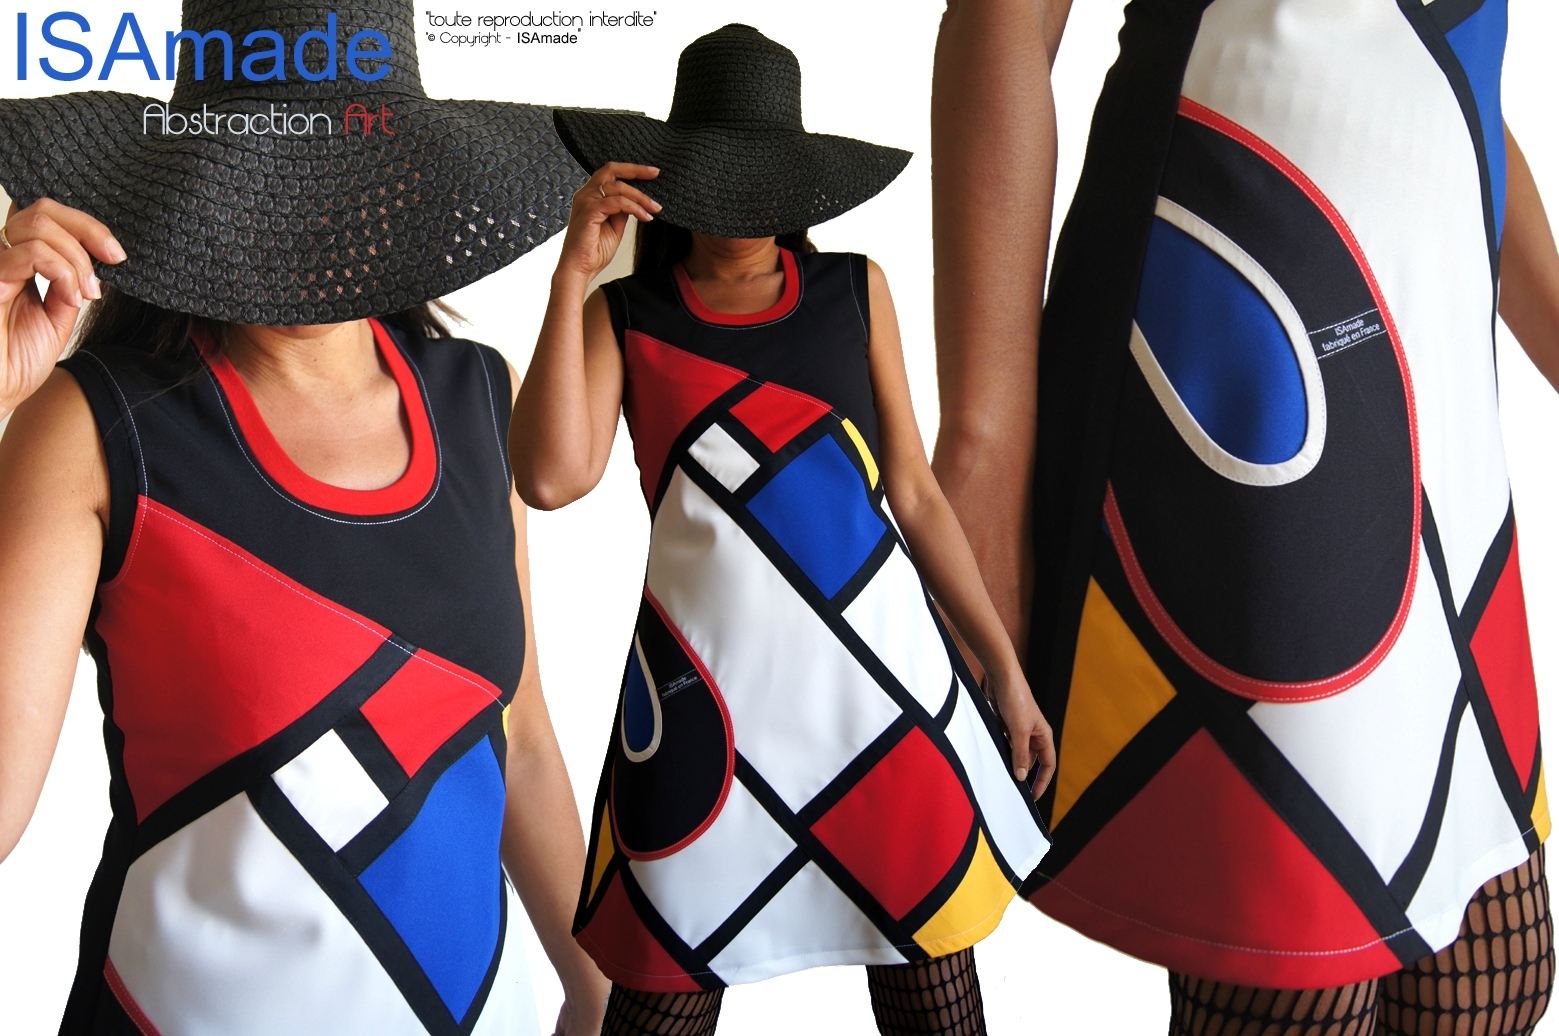 Robe patchwork graphique Arty patchwork chic créateur, un Automne aux influences Sixties : la robe »Abstraction Art » Made in France